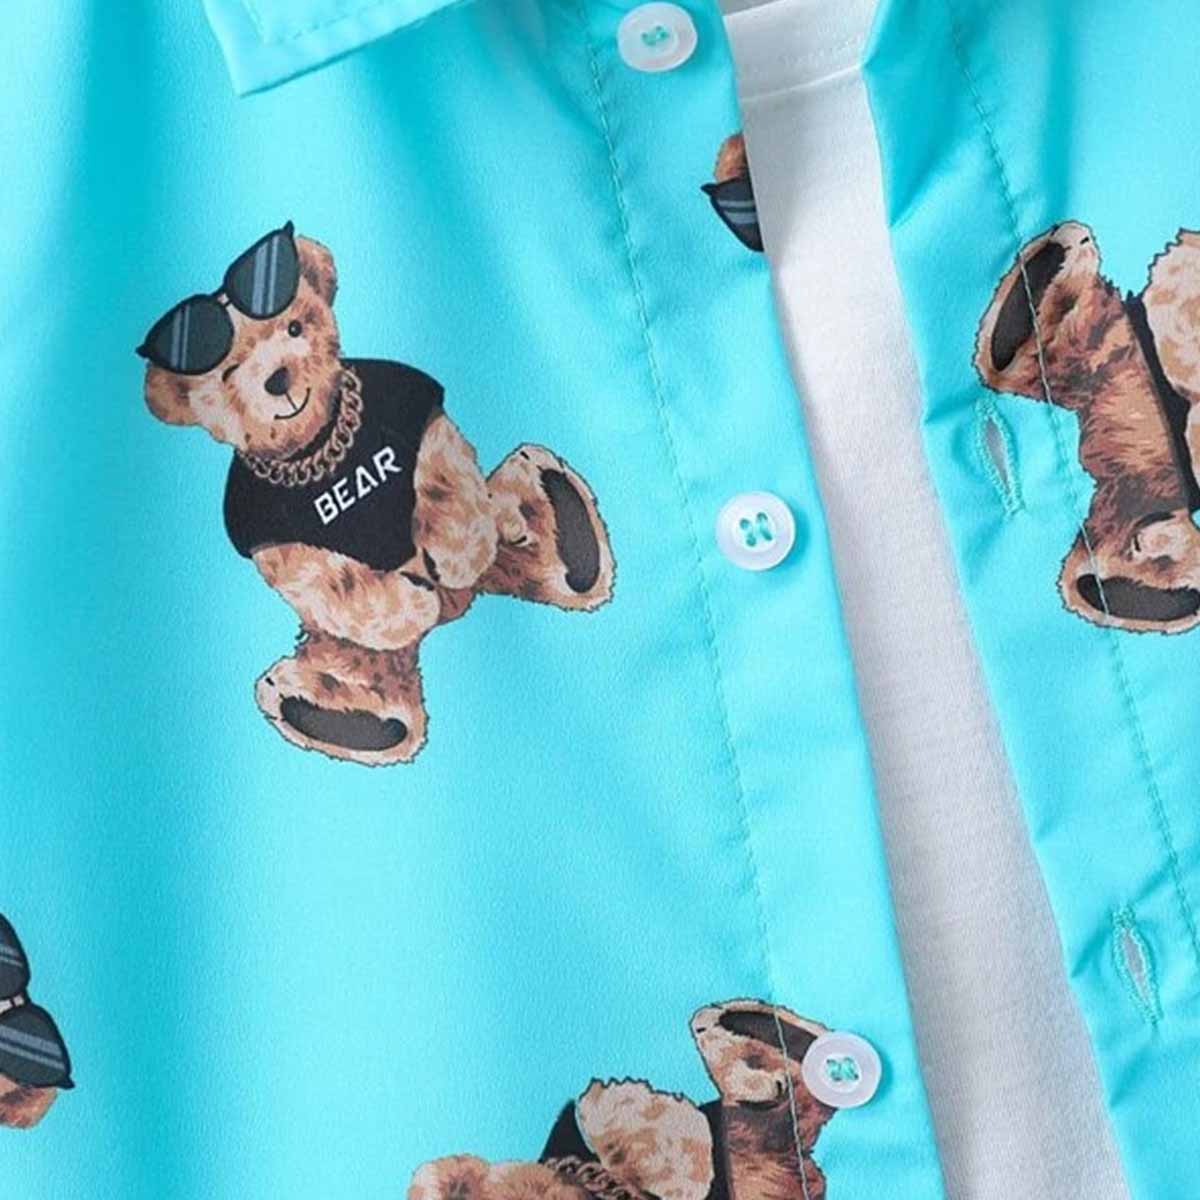 Venutaloza Baby Set Sunshine Patchwork & Bear (Combo Pack Of 2) Shirt & Shorts Without tee Two Piece Set For Boy & Girls.